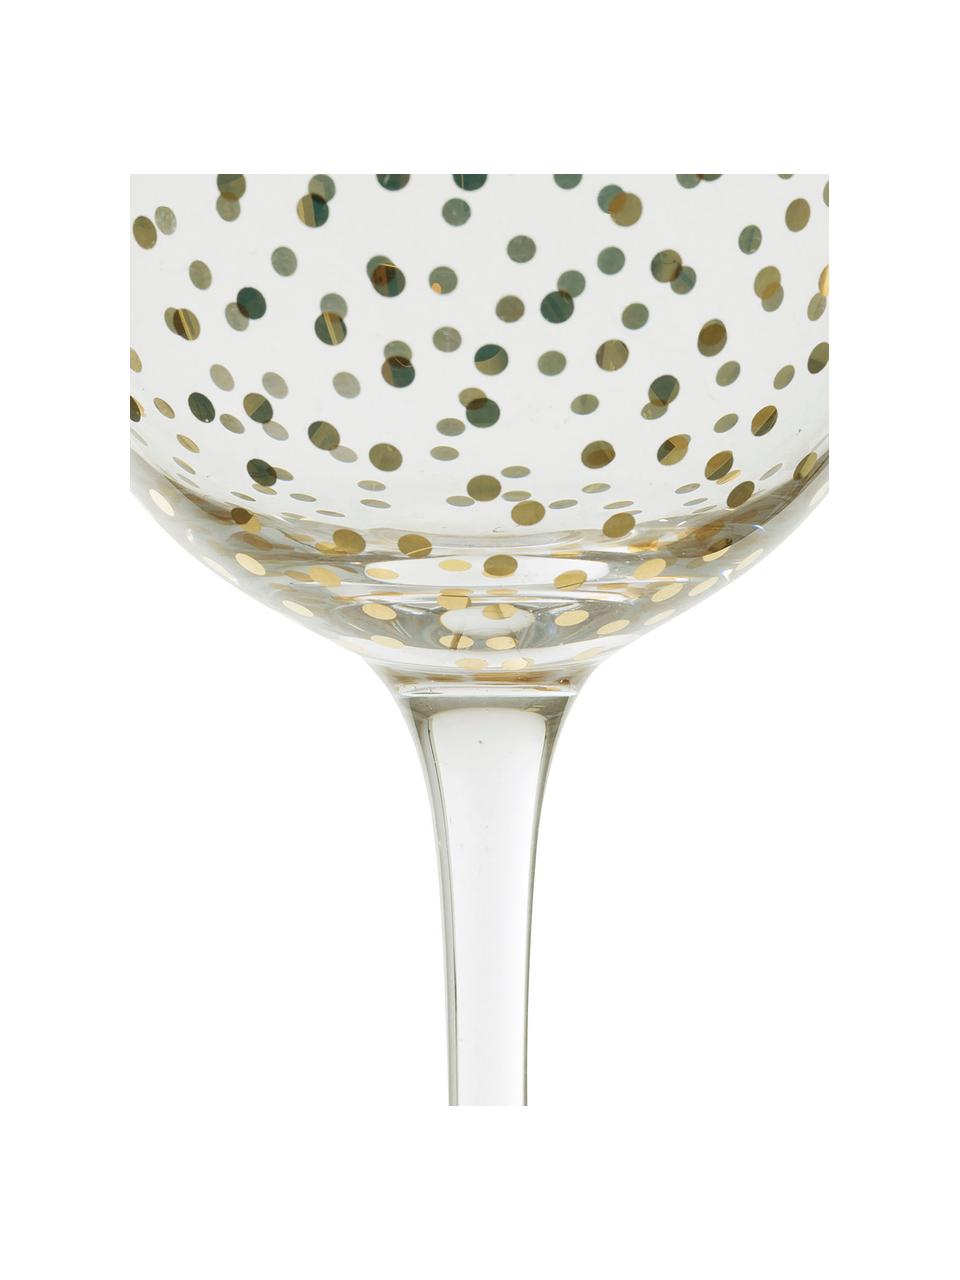 Bicchiere vino con puntini dorati Scintille 4 pz, Vetro, Trasparente, dorato, Ø 7 x Alt. 22 cm